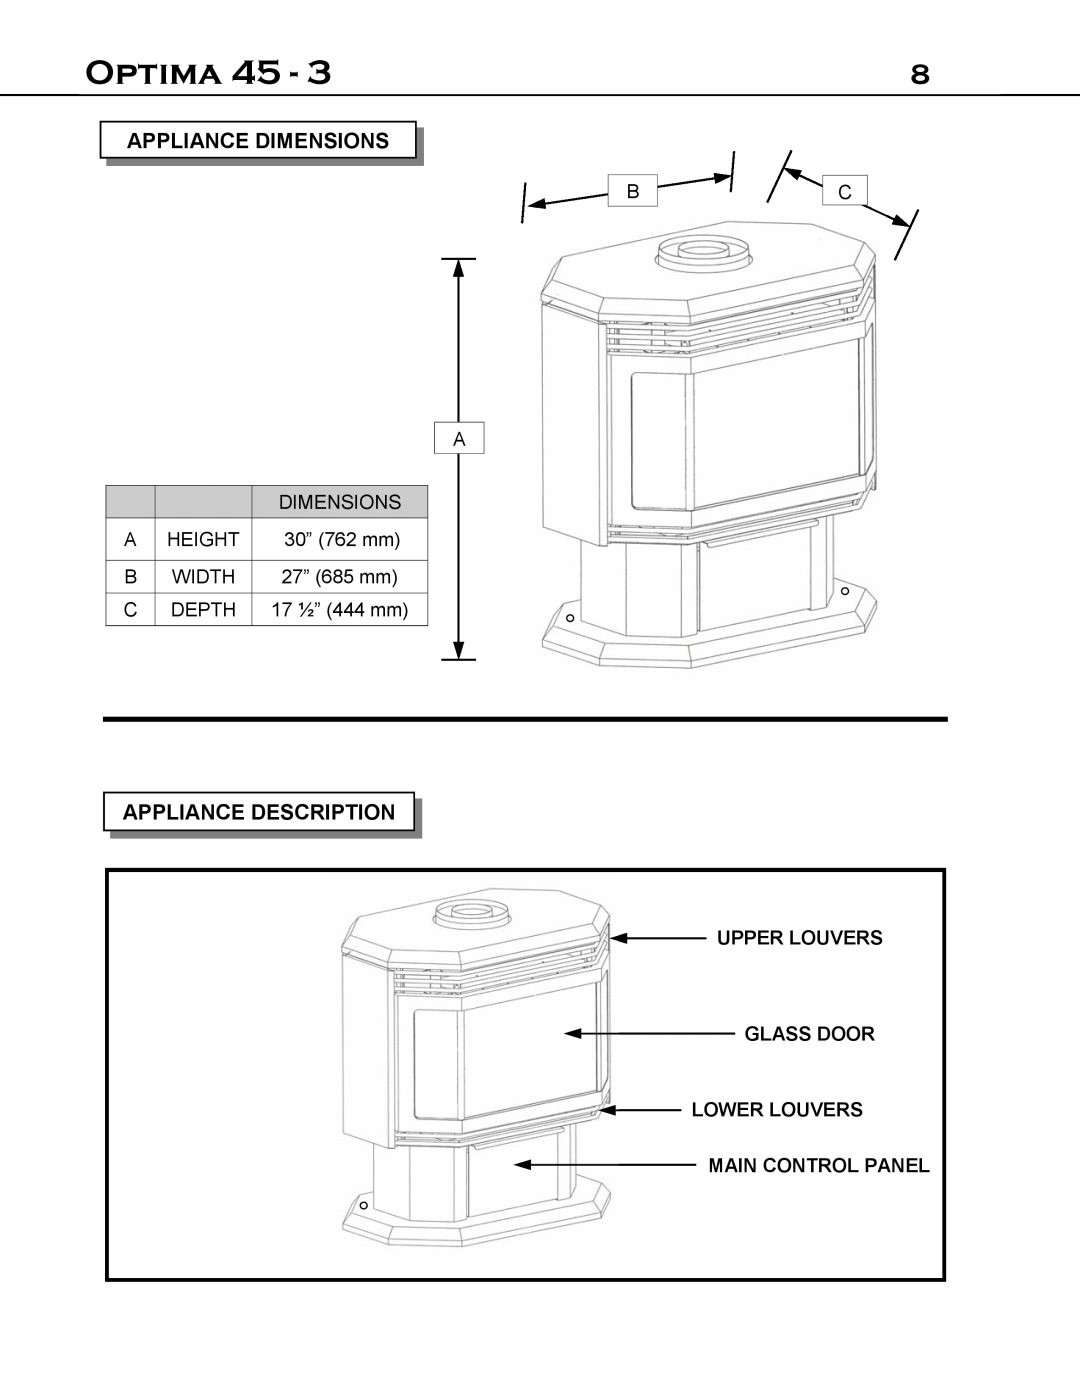 Optima Company 45 - 3 manual Appliance Dimensions, Appliance Description, Optima, Upper Louvers Glass Door Lower Louvers 